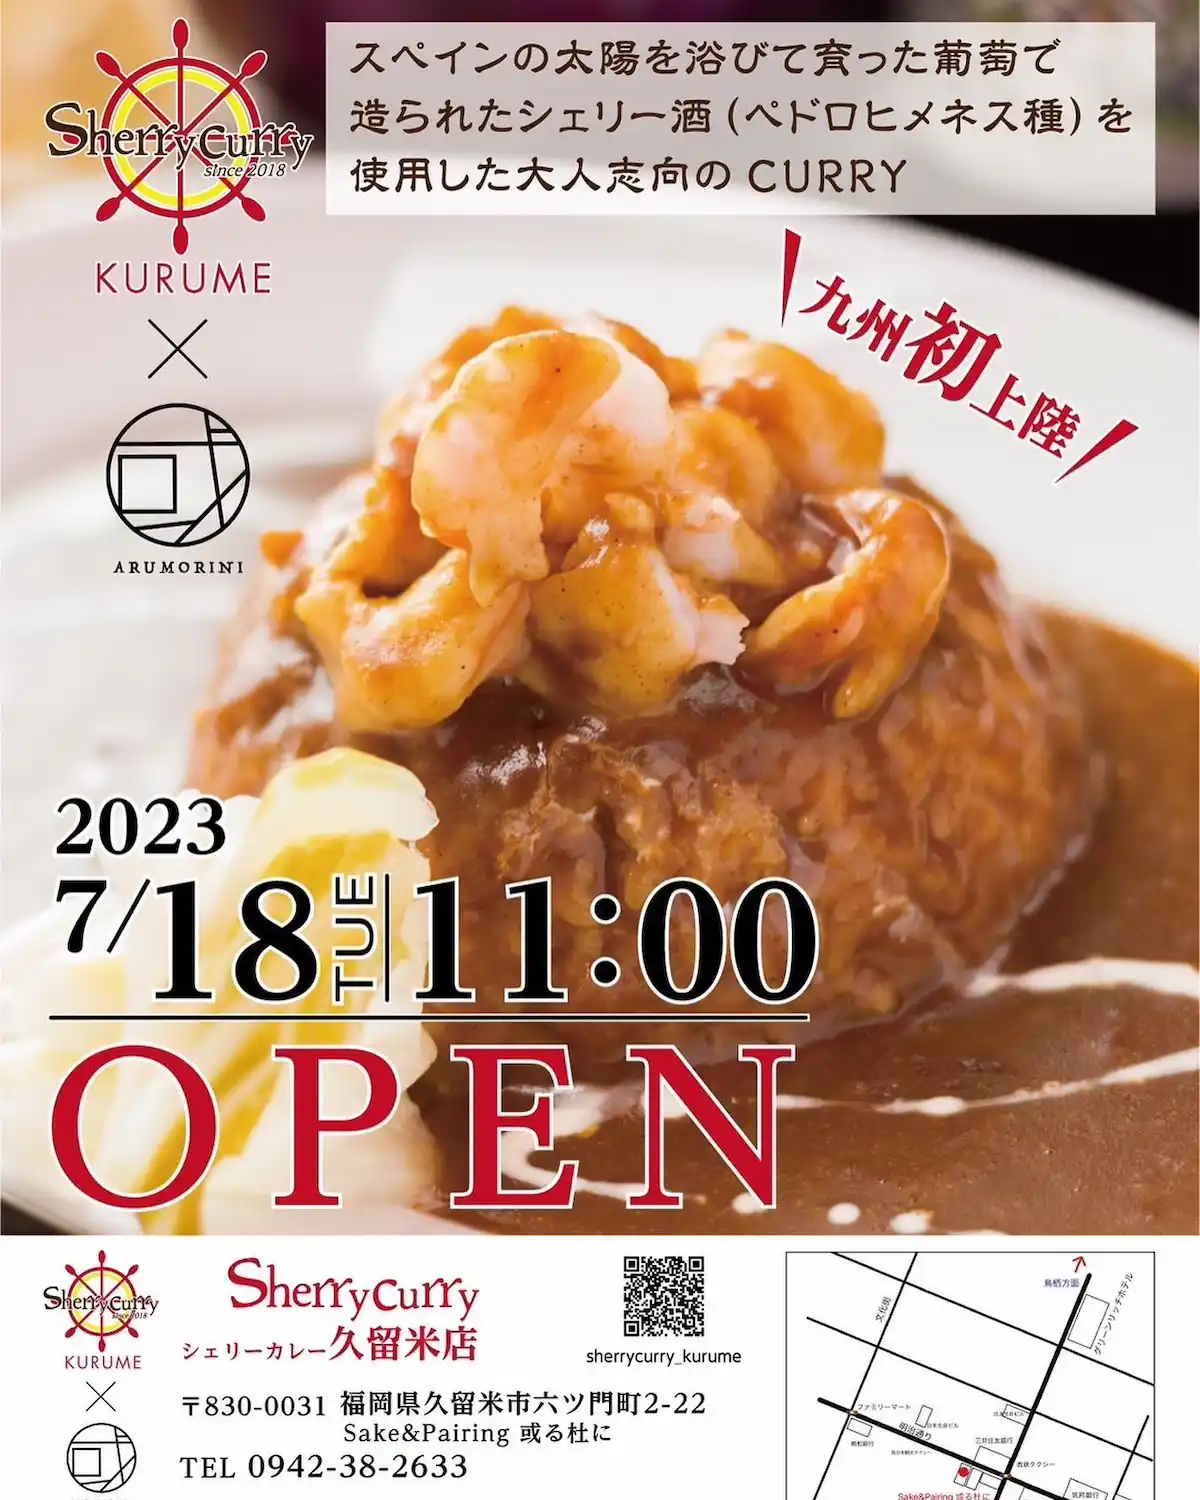 Sherry Curry久留米店って九州初上陸のお店がオープンするみたい。7月18日